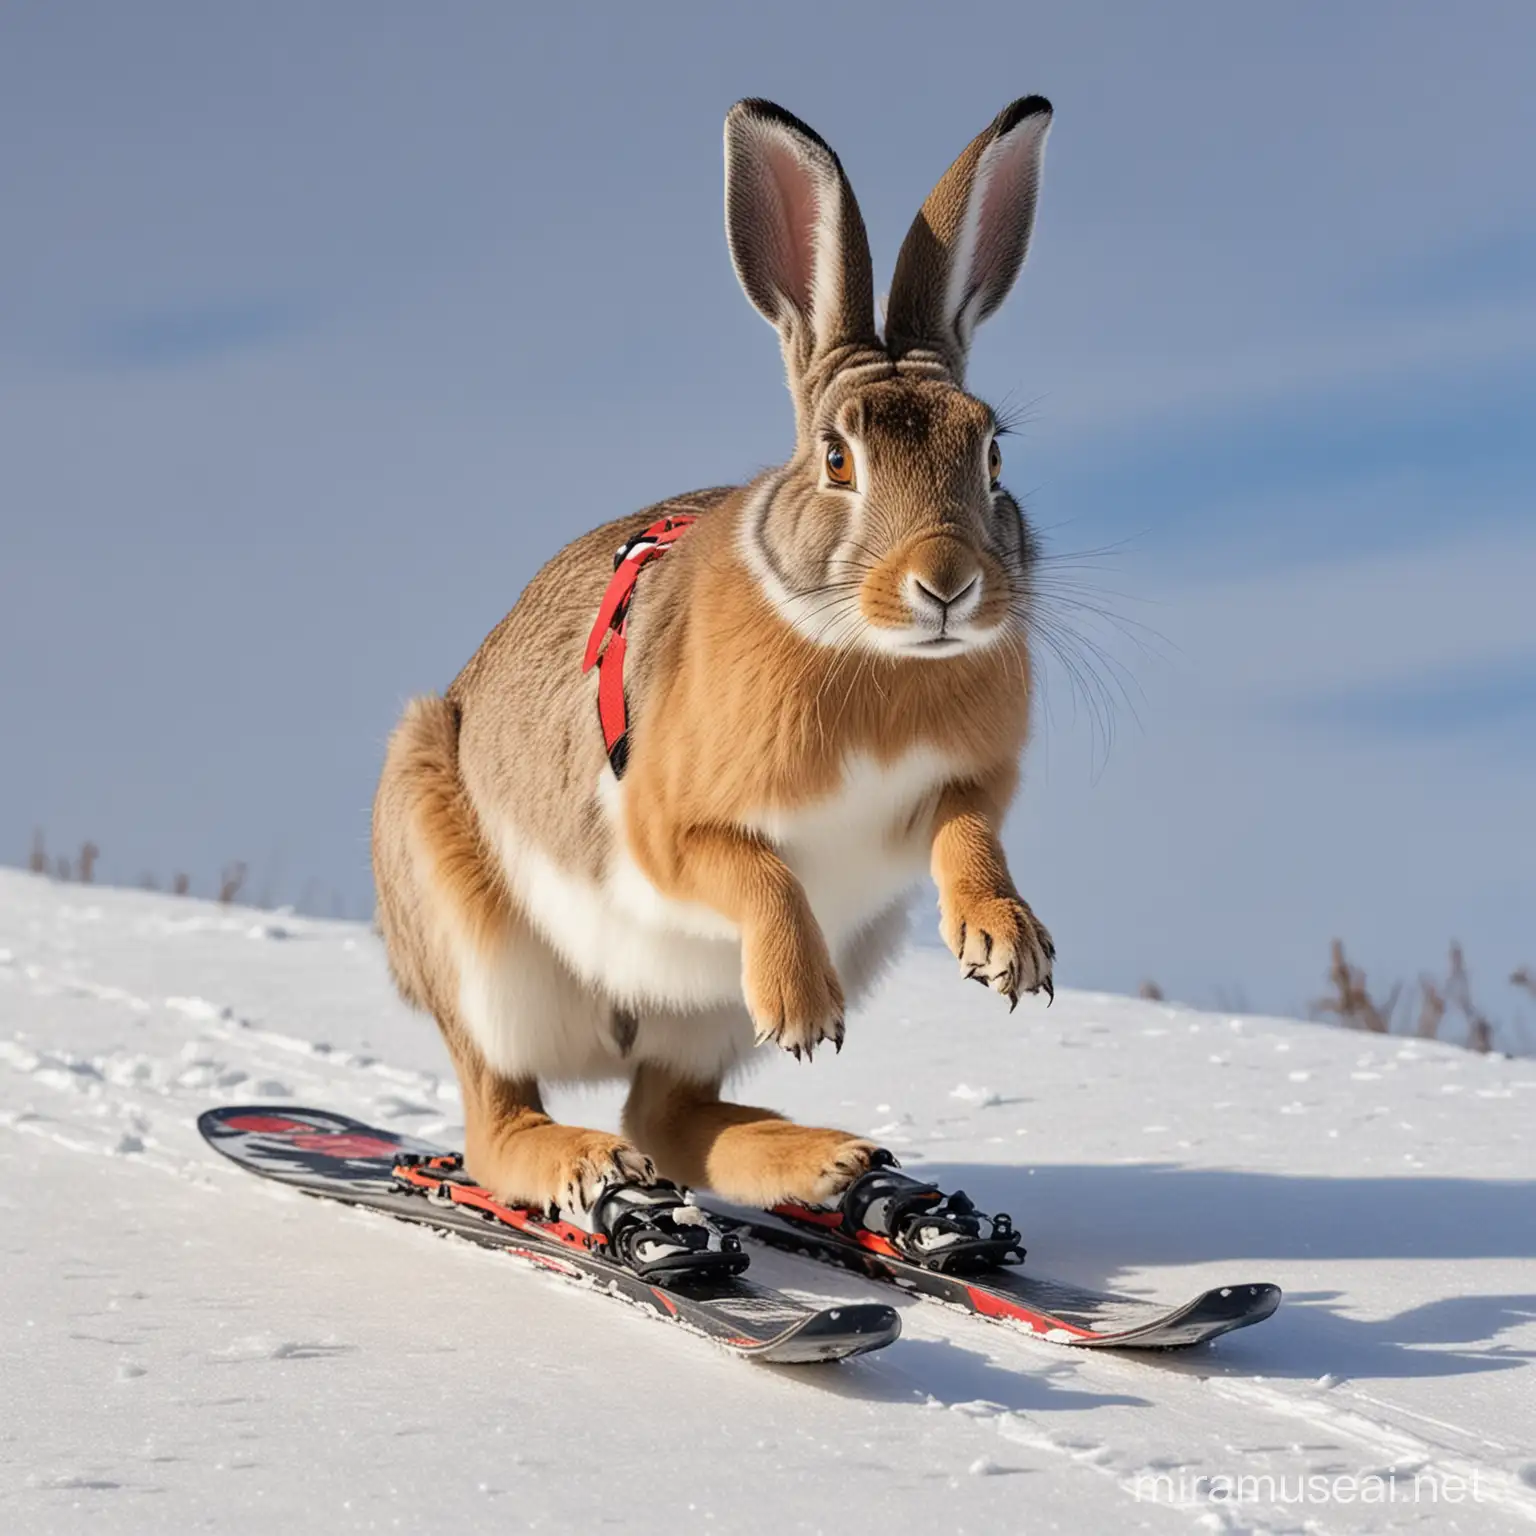 Rabbit with Skiing Prostheses Glides Through Winter Wonderland